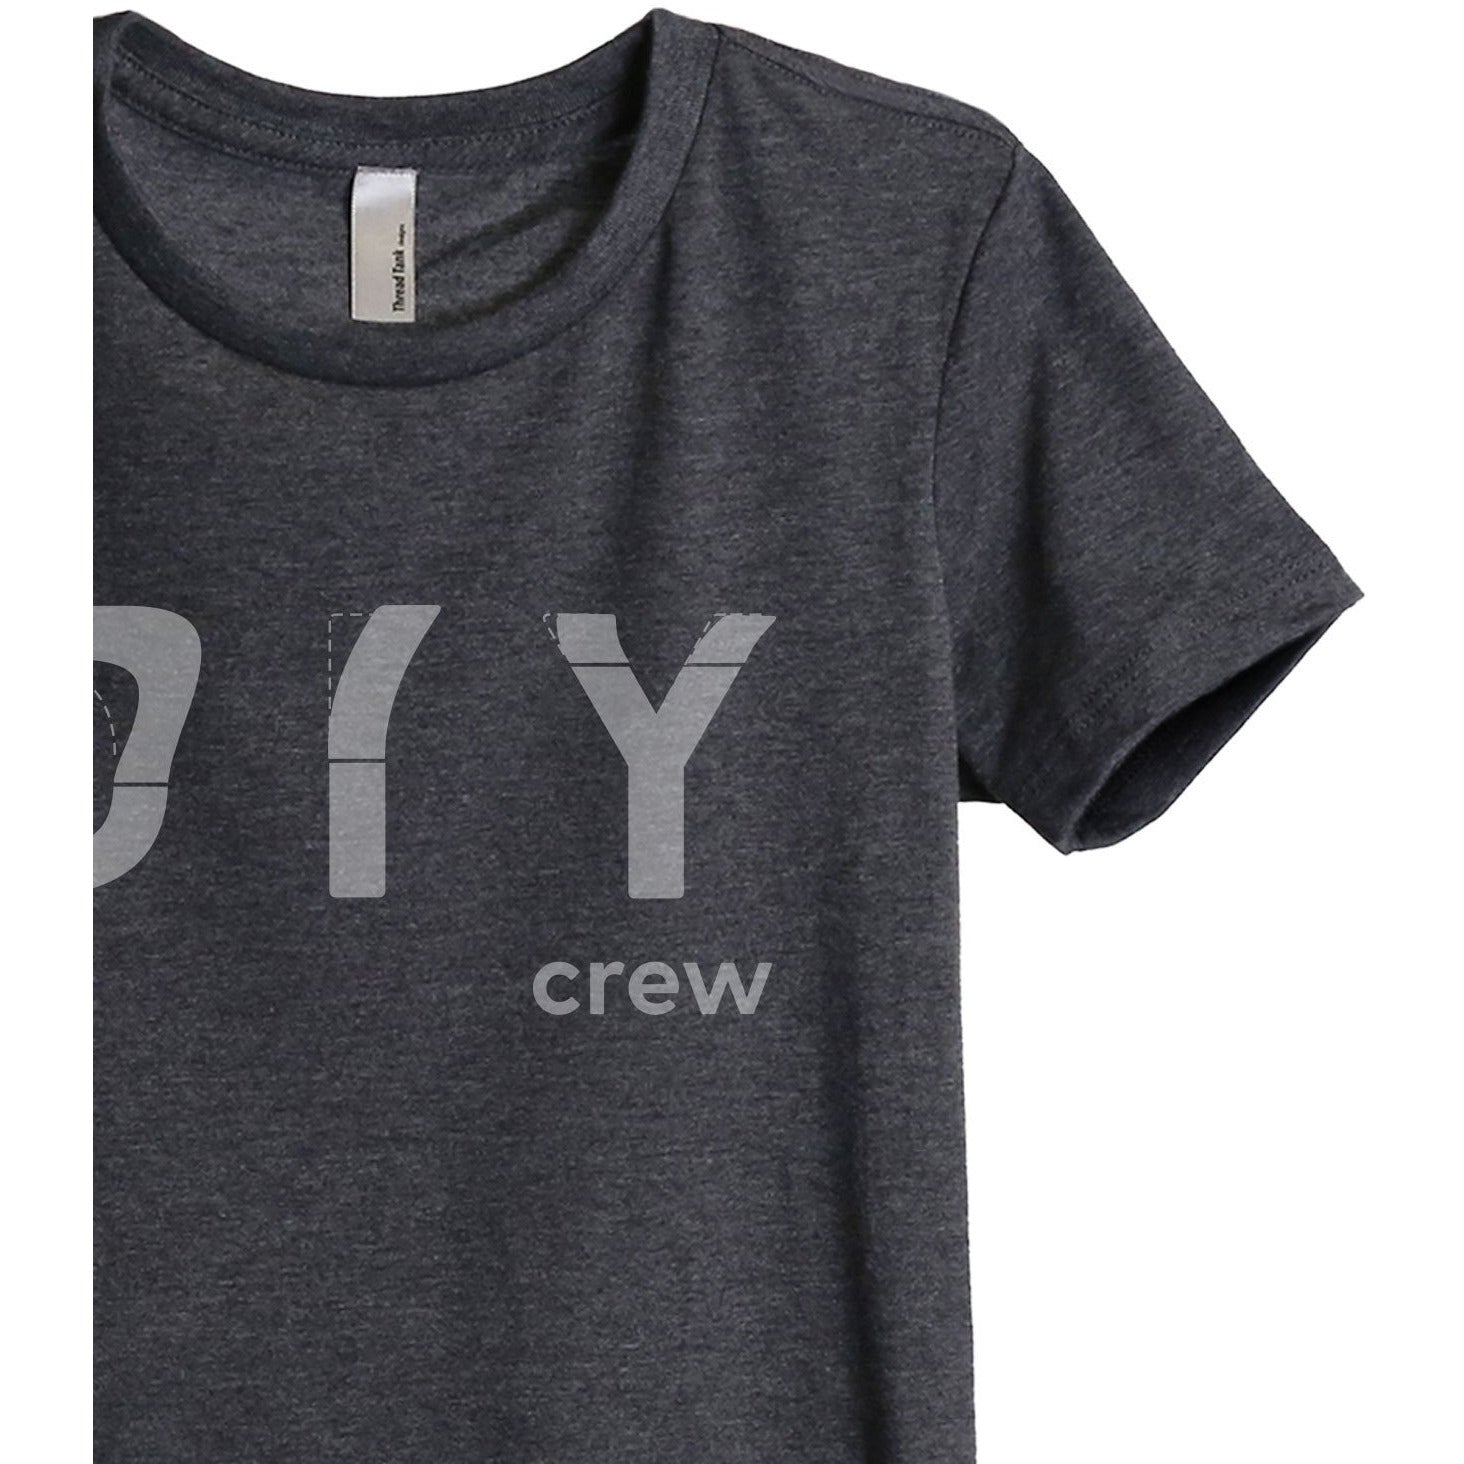 DIY Crew Women's Relaxed Crewneck T-Shirt Top Tee Charcoal Grey Zoom Details